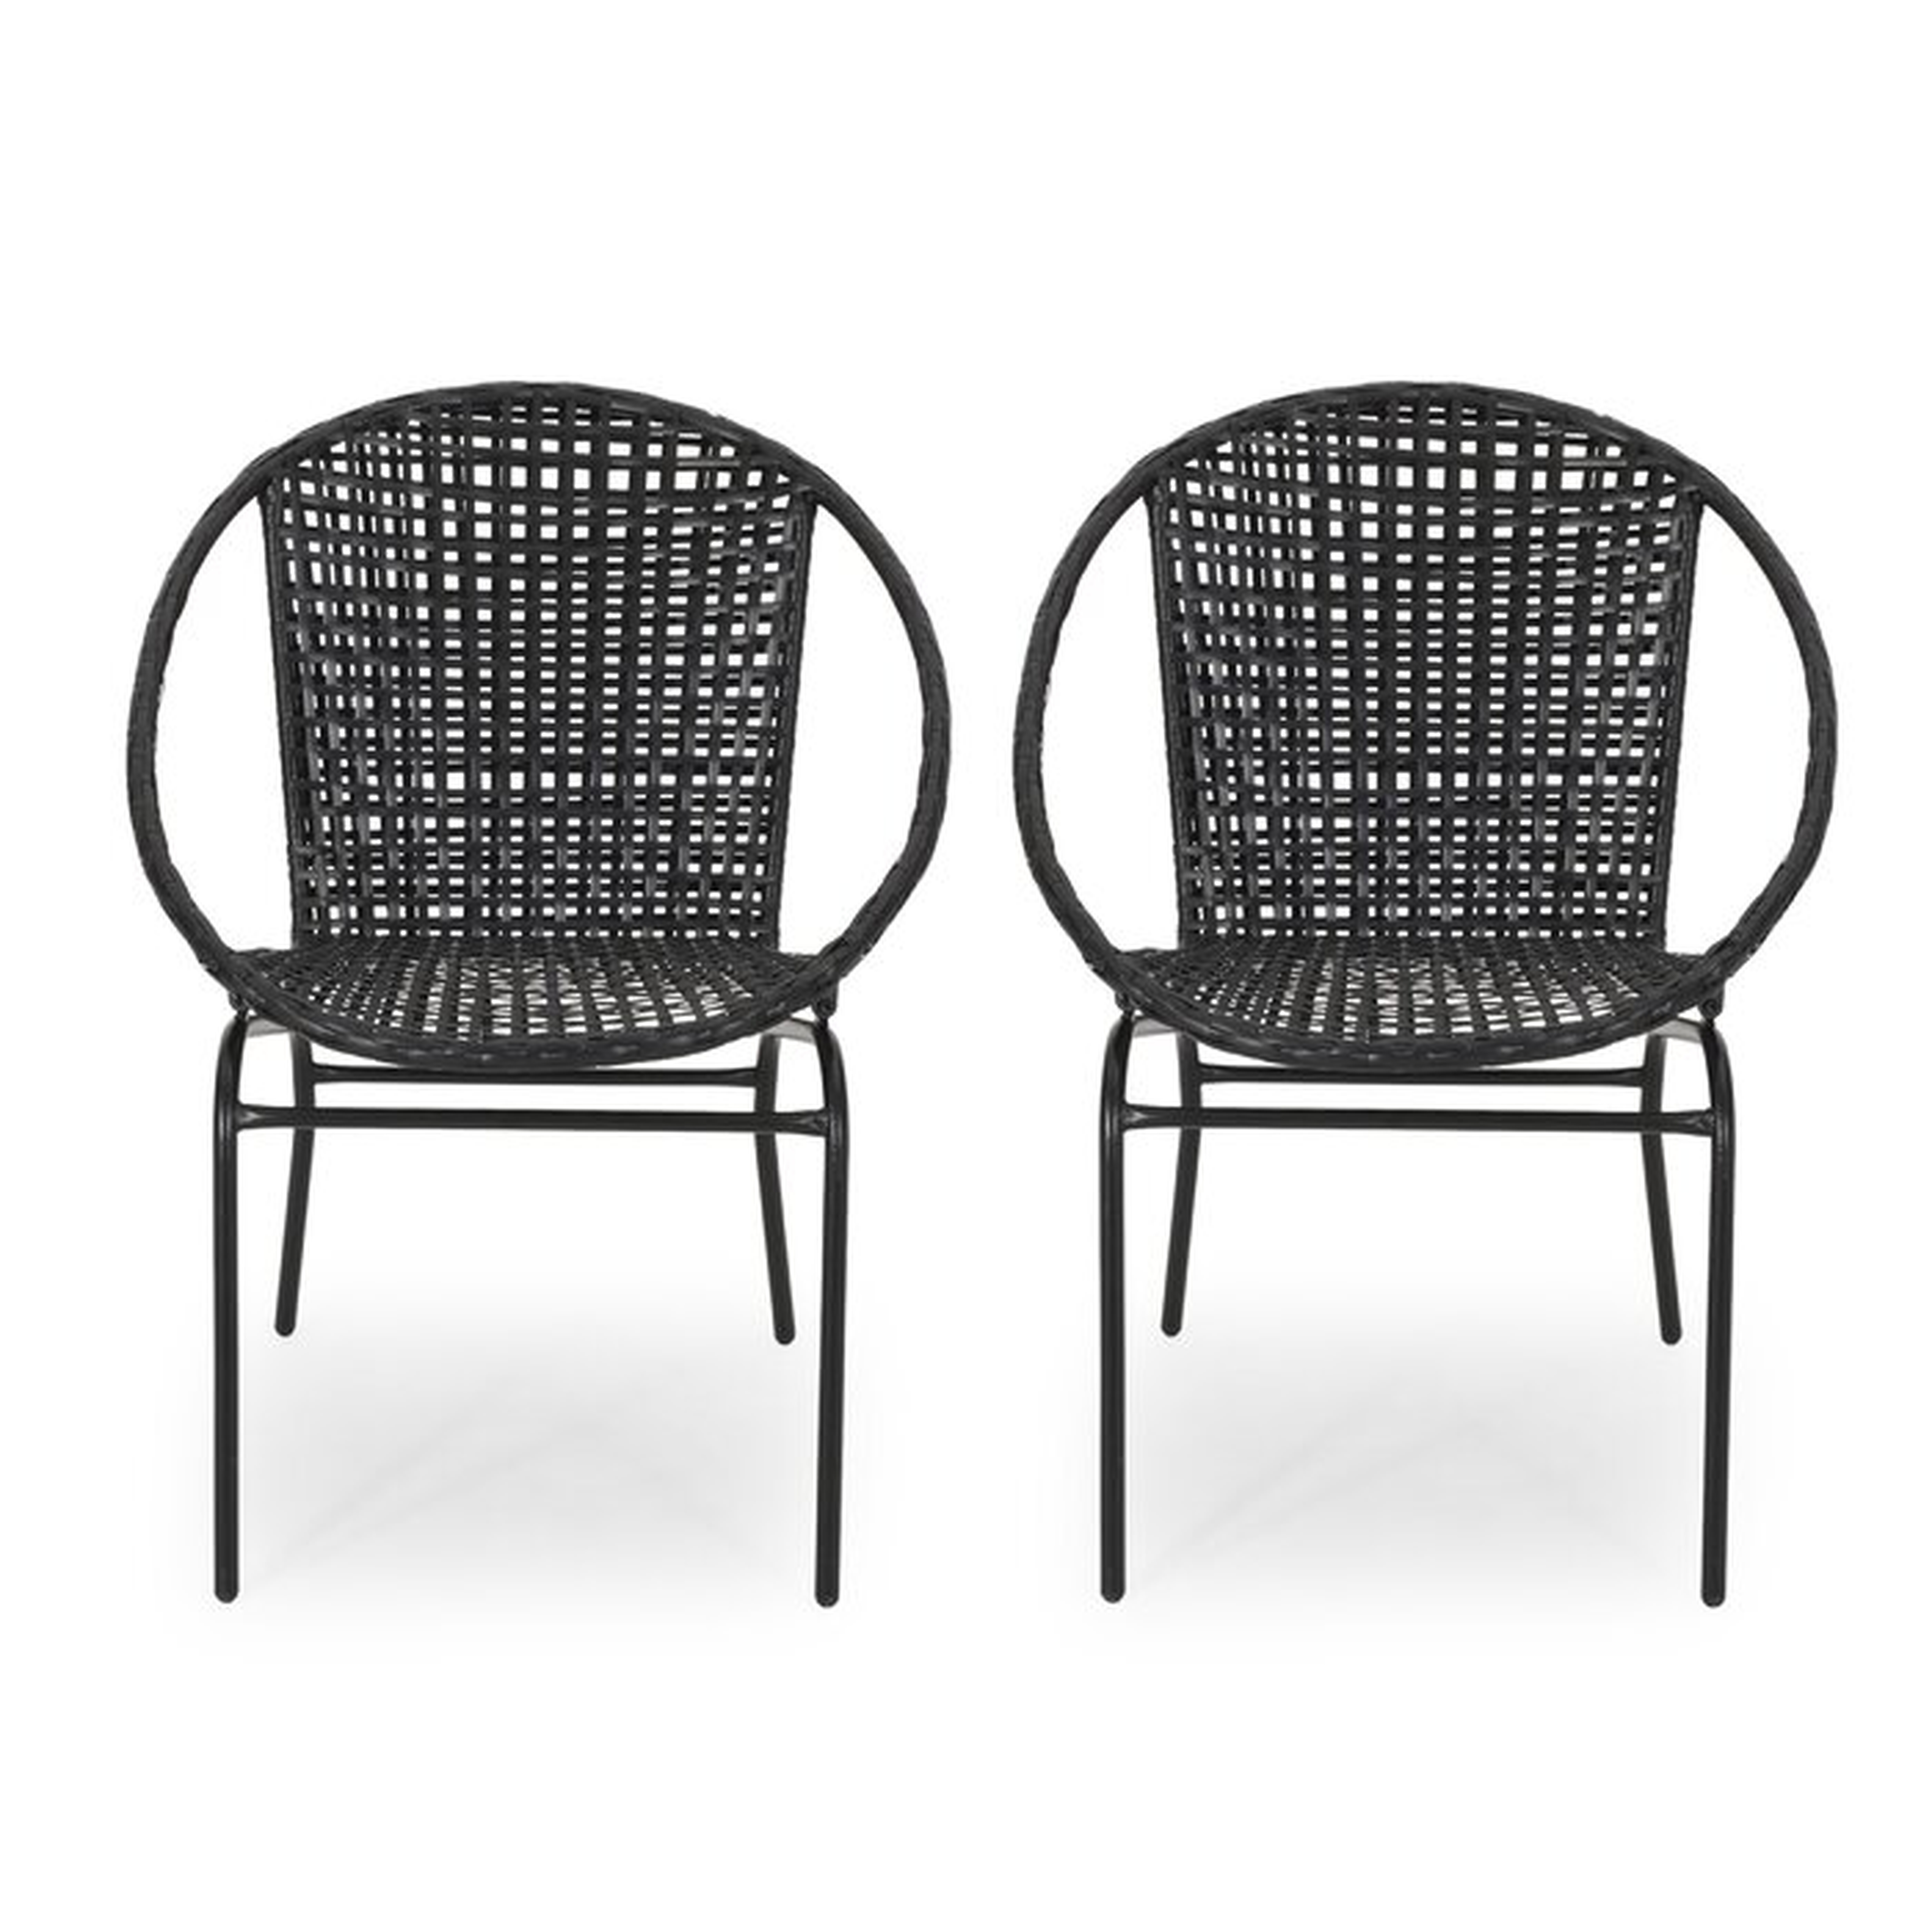 Desdemona Outdoor Modern Patio Chair (Set of 2) - Wayfair